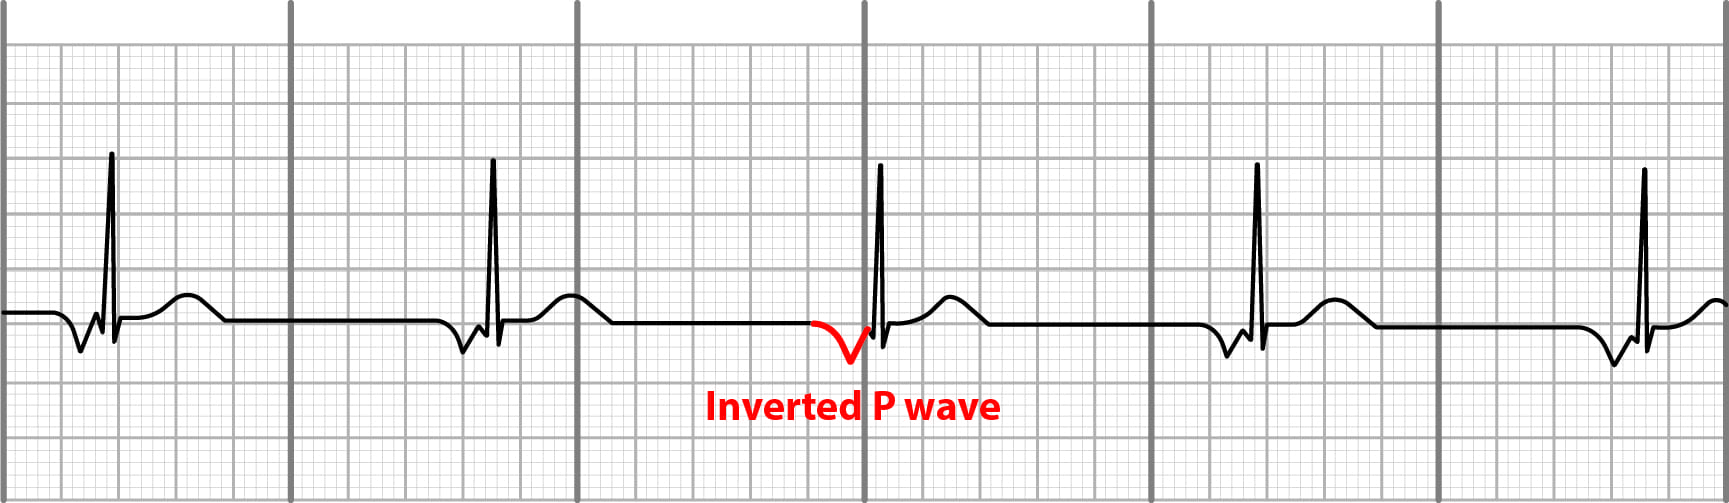 Junctional rhythm on EKG